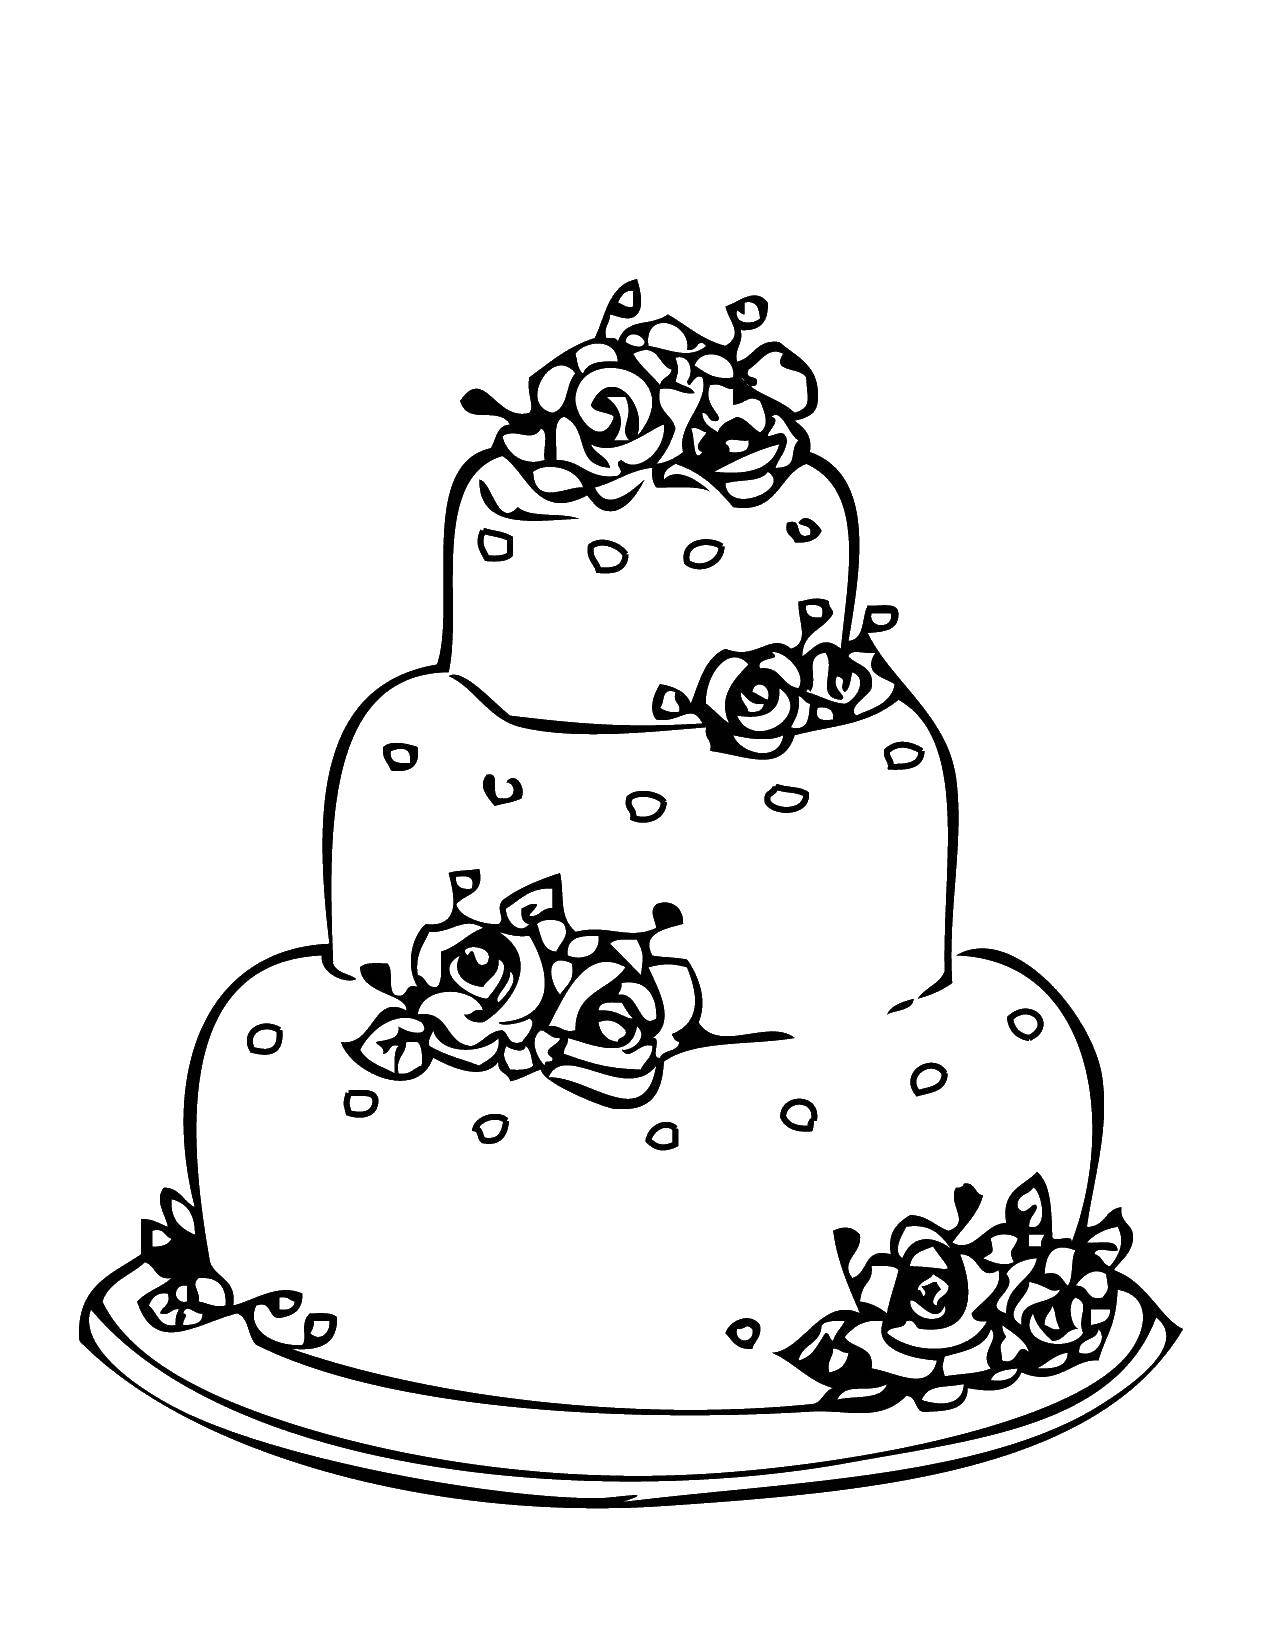 Coloring Wedding cake. Category Wedding. Tags:  Cake, food, holiday.